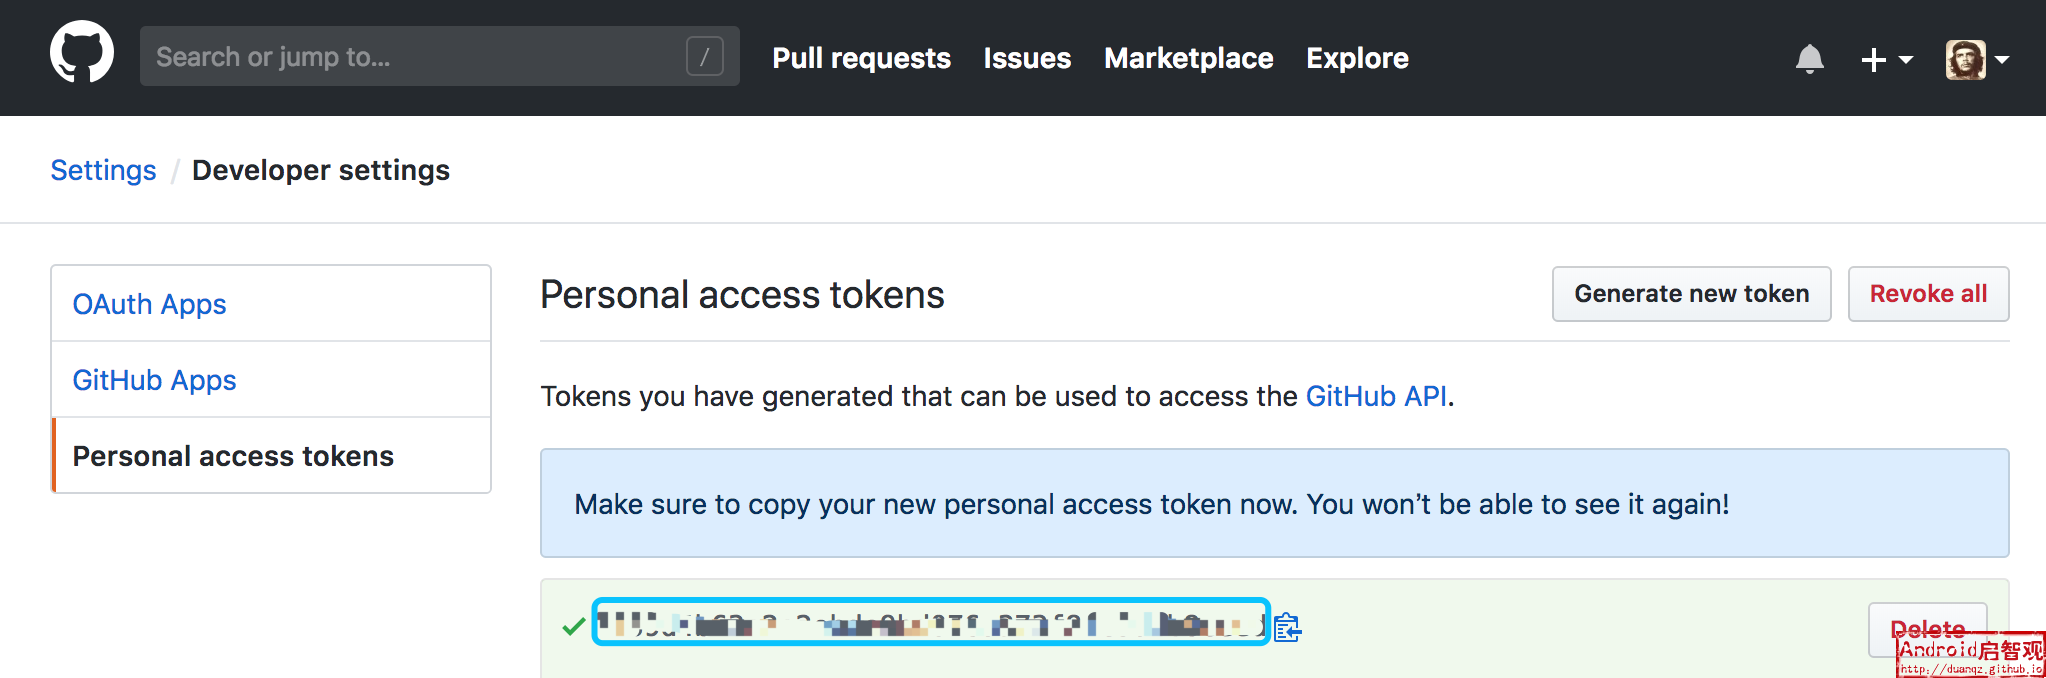 Github Personal
Access Token